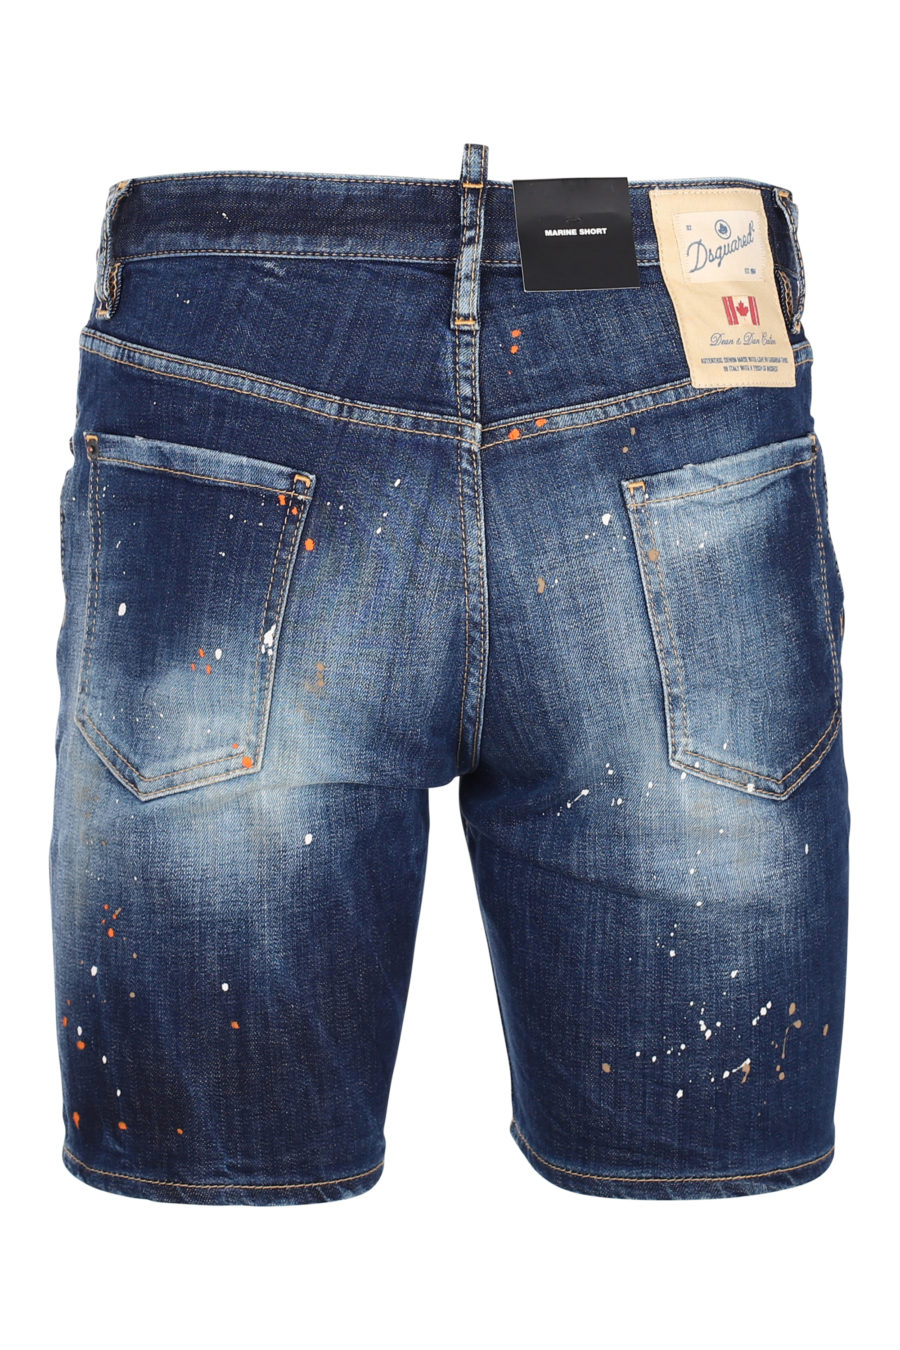 Pantalon corto "patch marine" azul con parches marron - IMG 9802